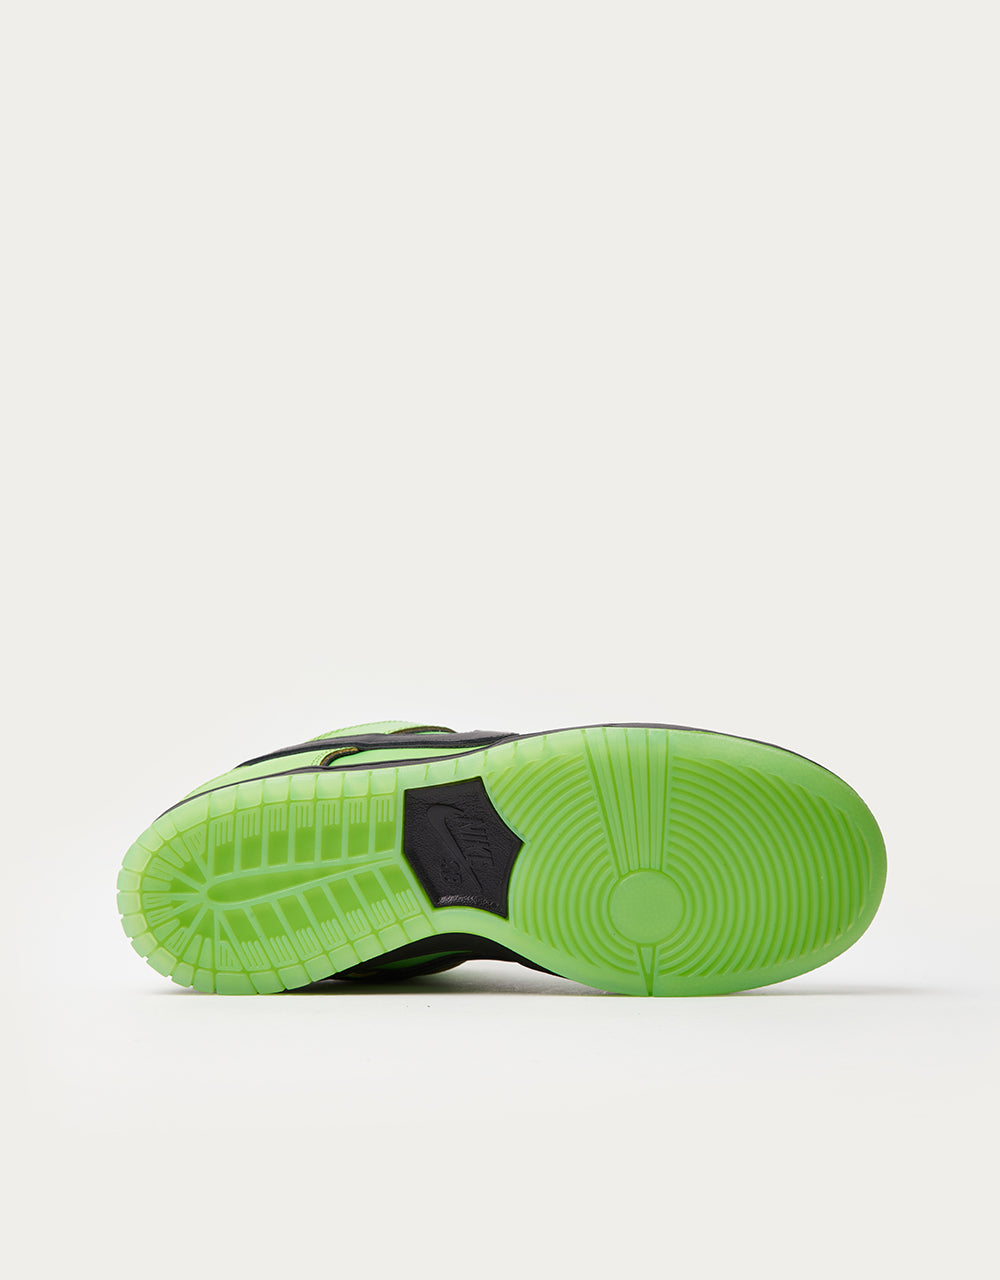 Nike SB x Powerpuff Girls 'Buttercup' Dunk Low Pro QS Skate Shoes - Mean Green/Black-Lotus Pink